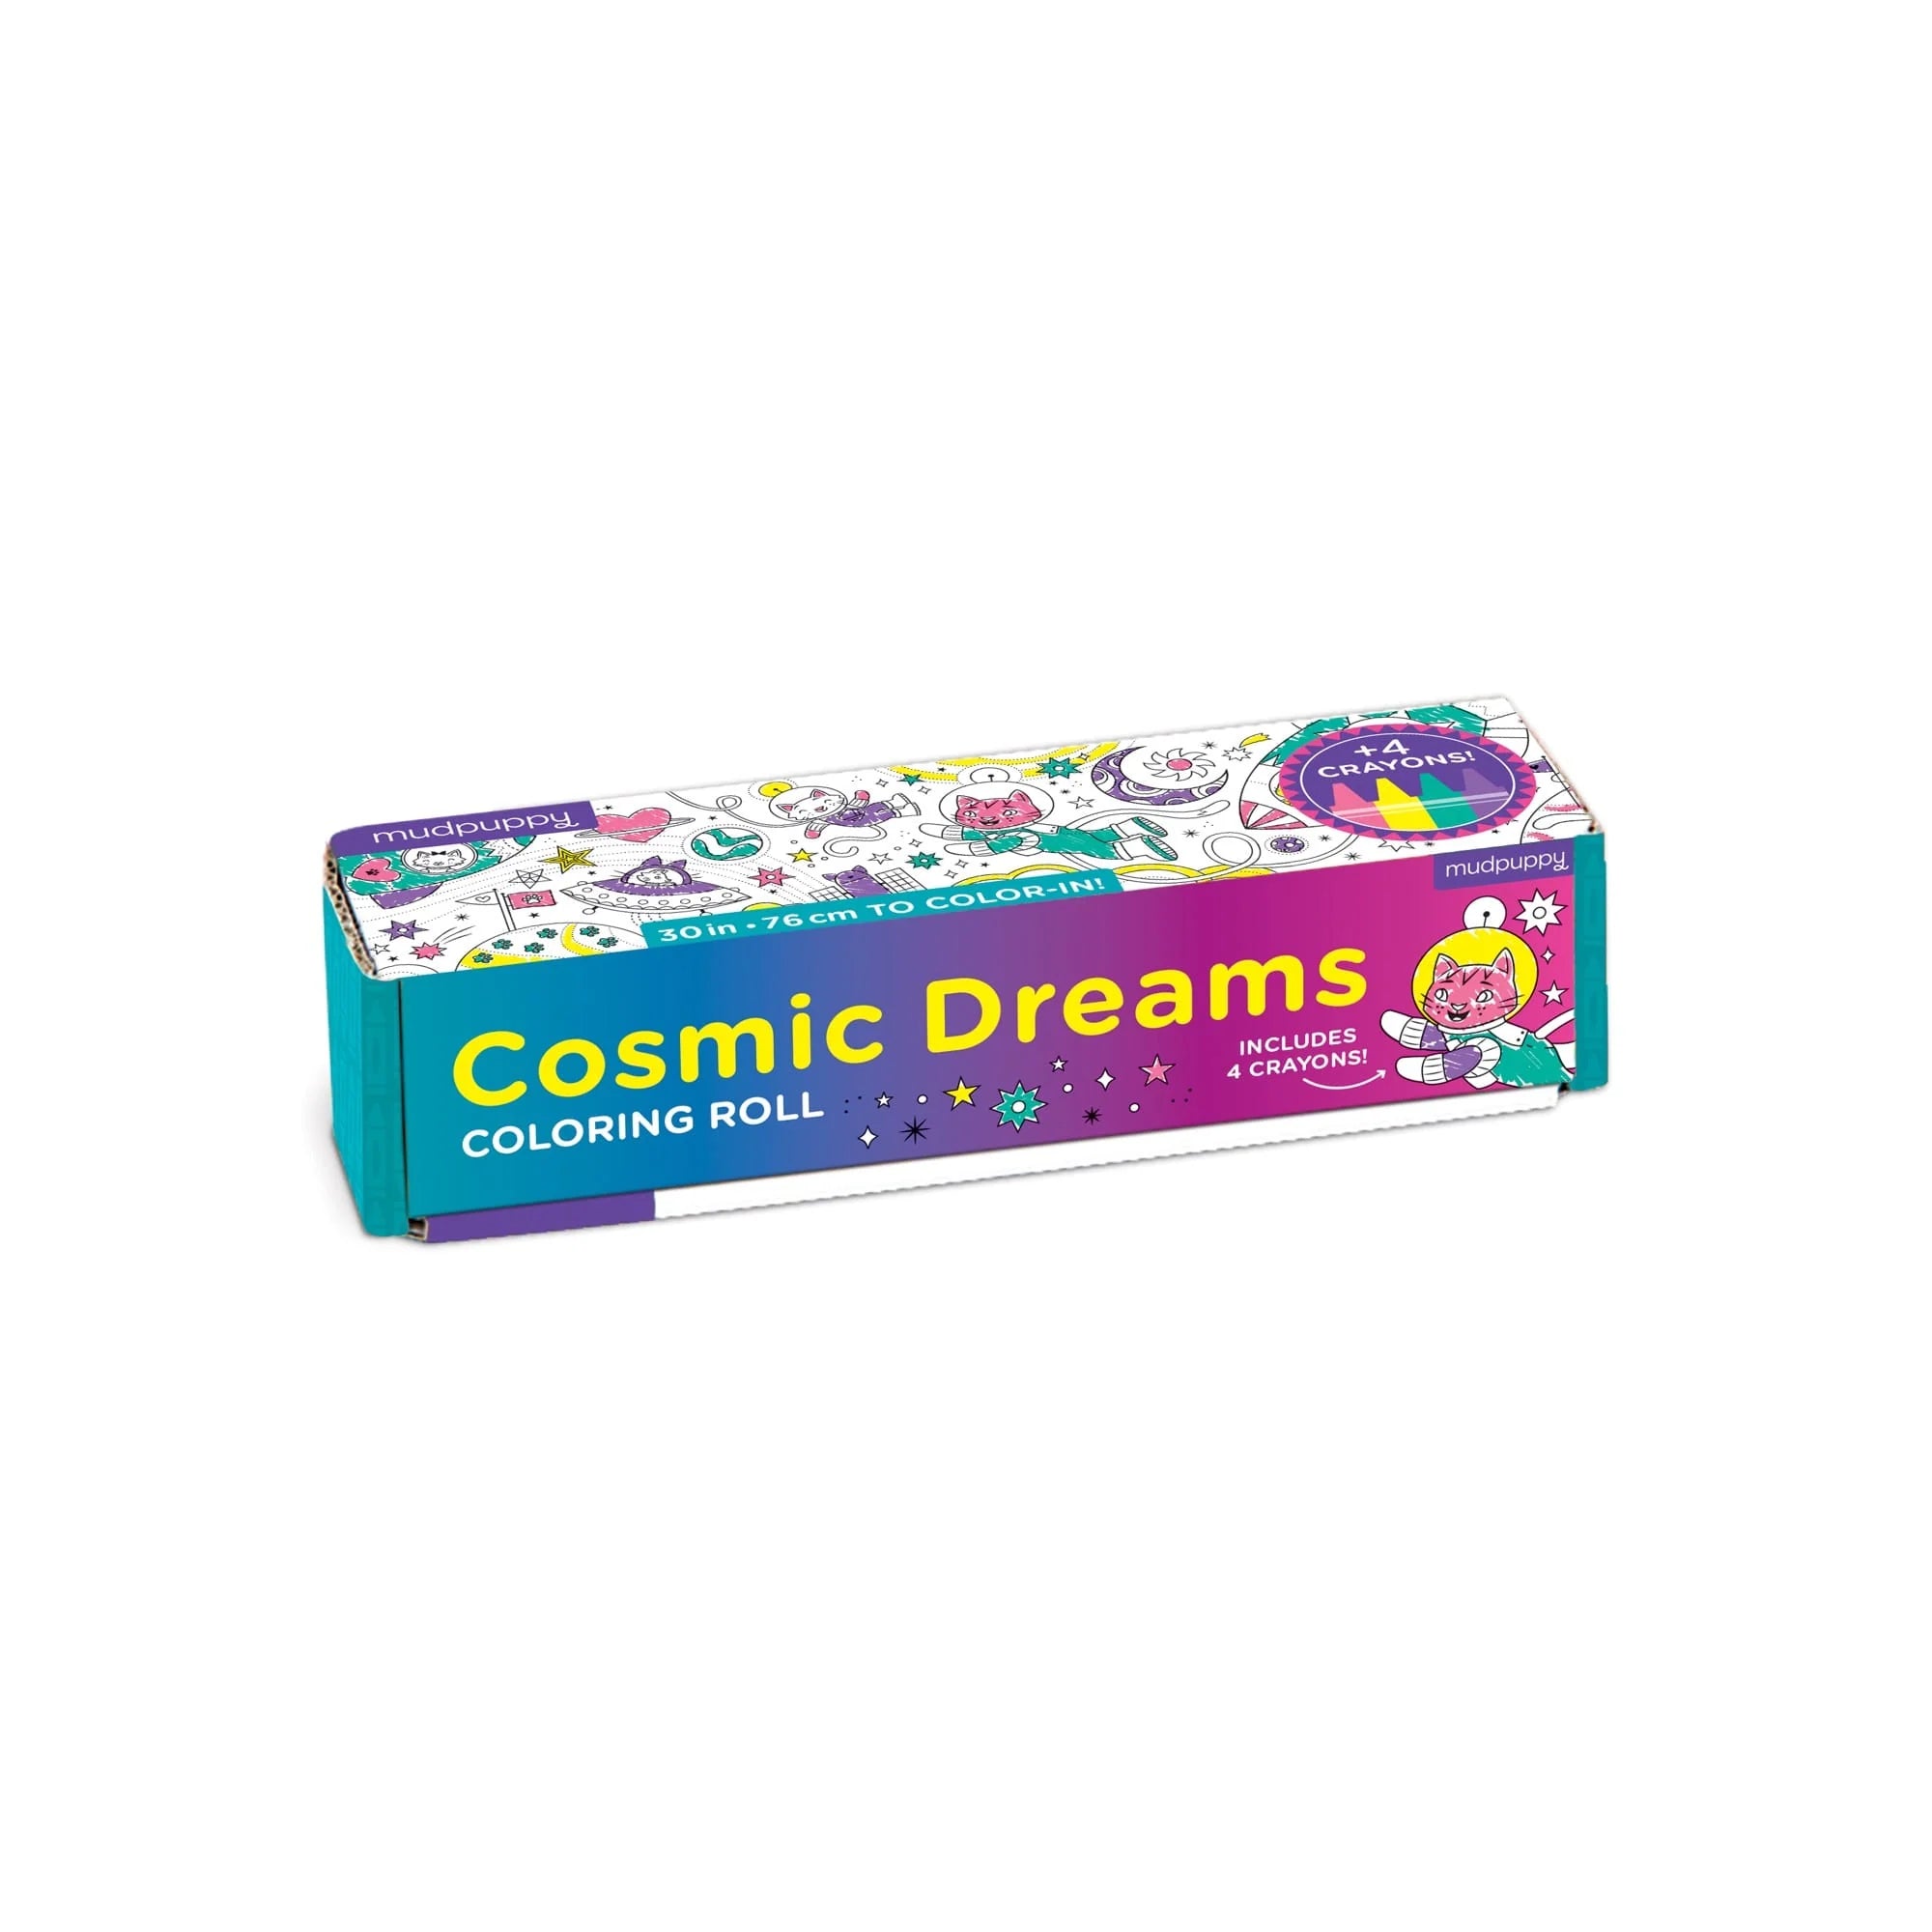 Cosmic Dreams Coloring Roll